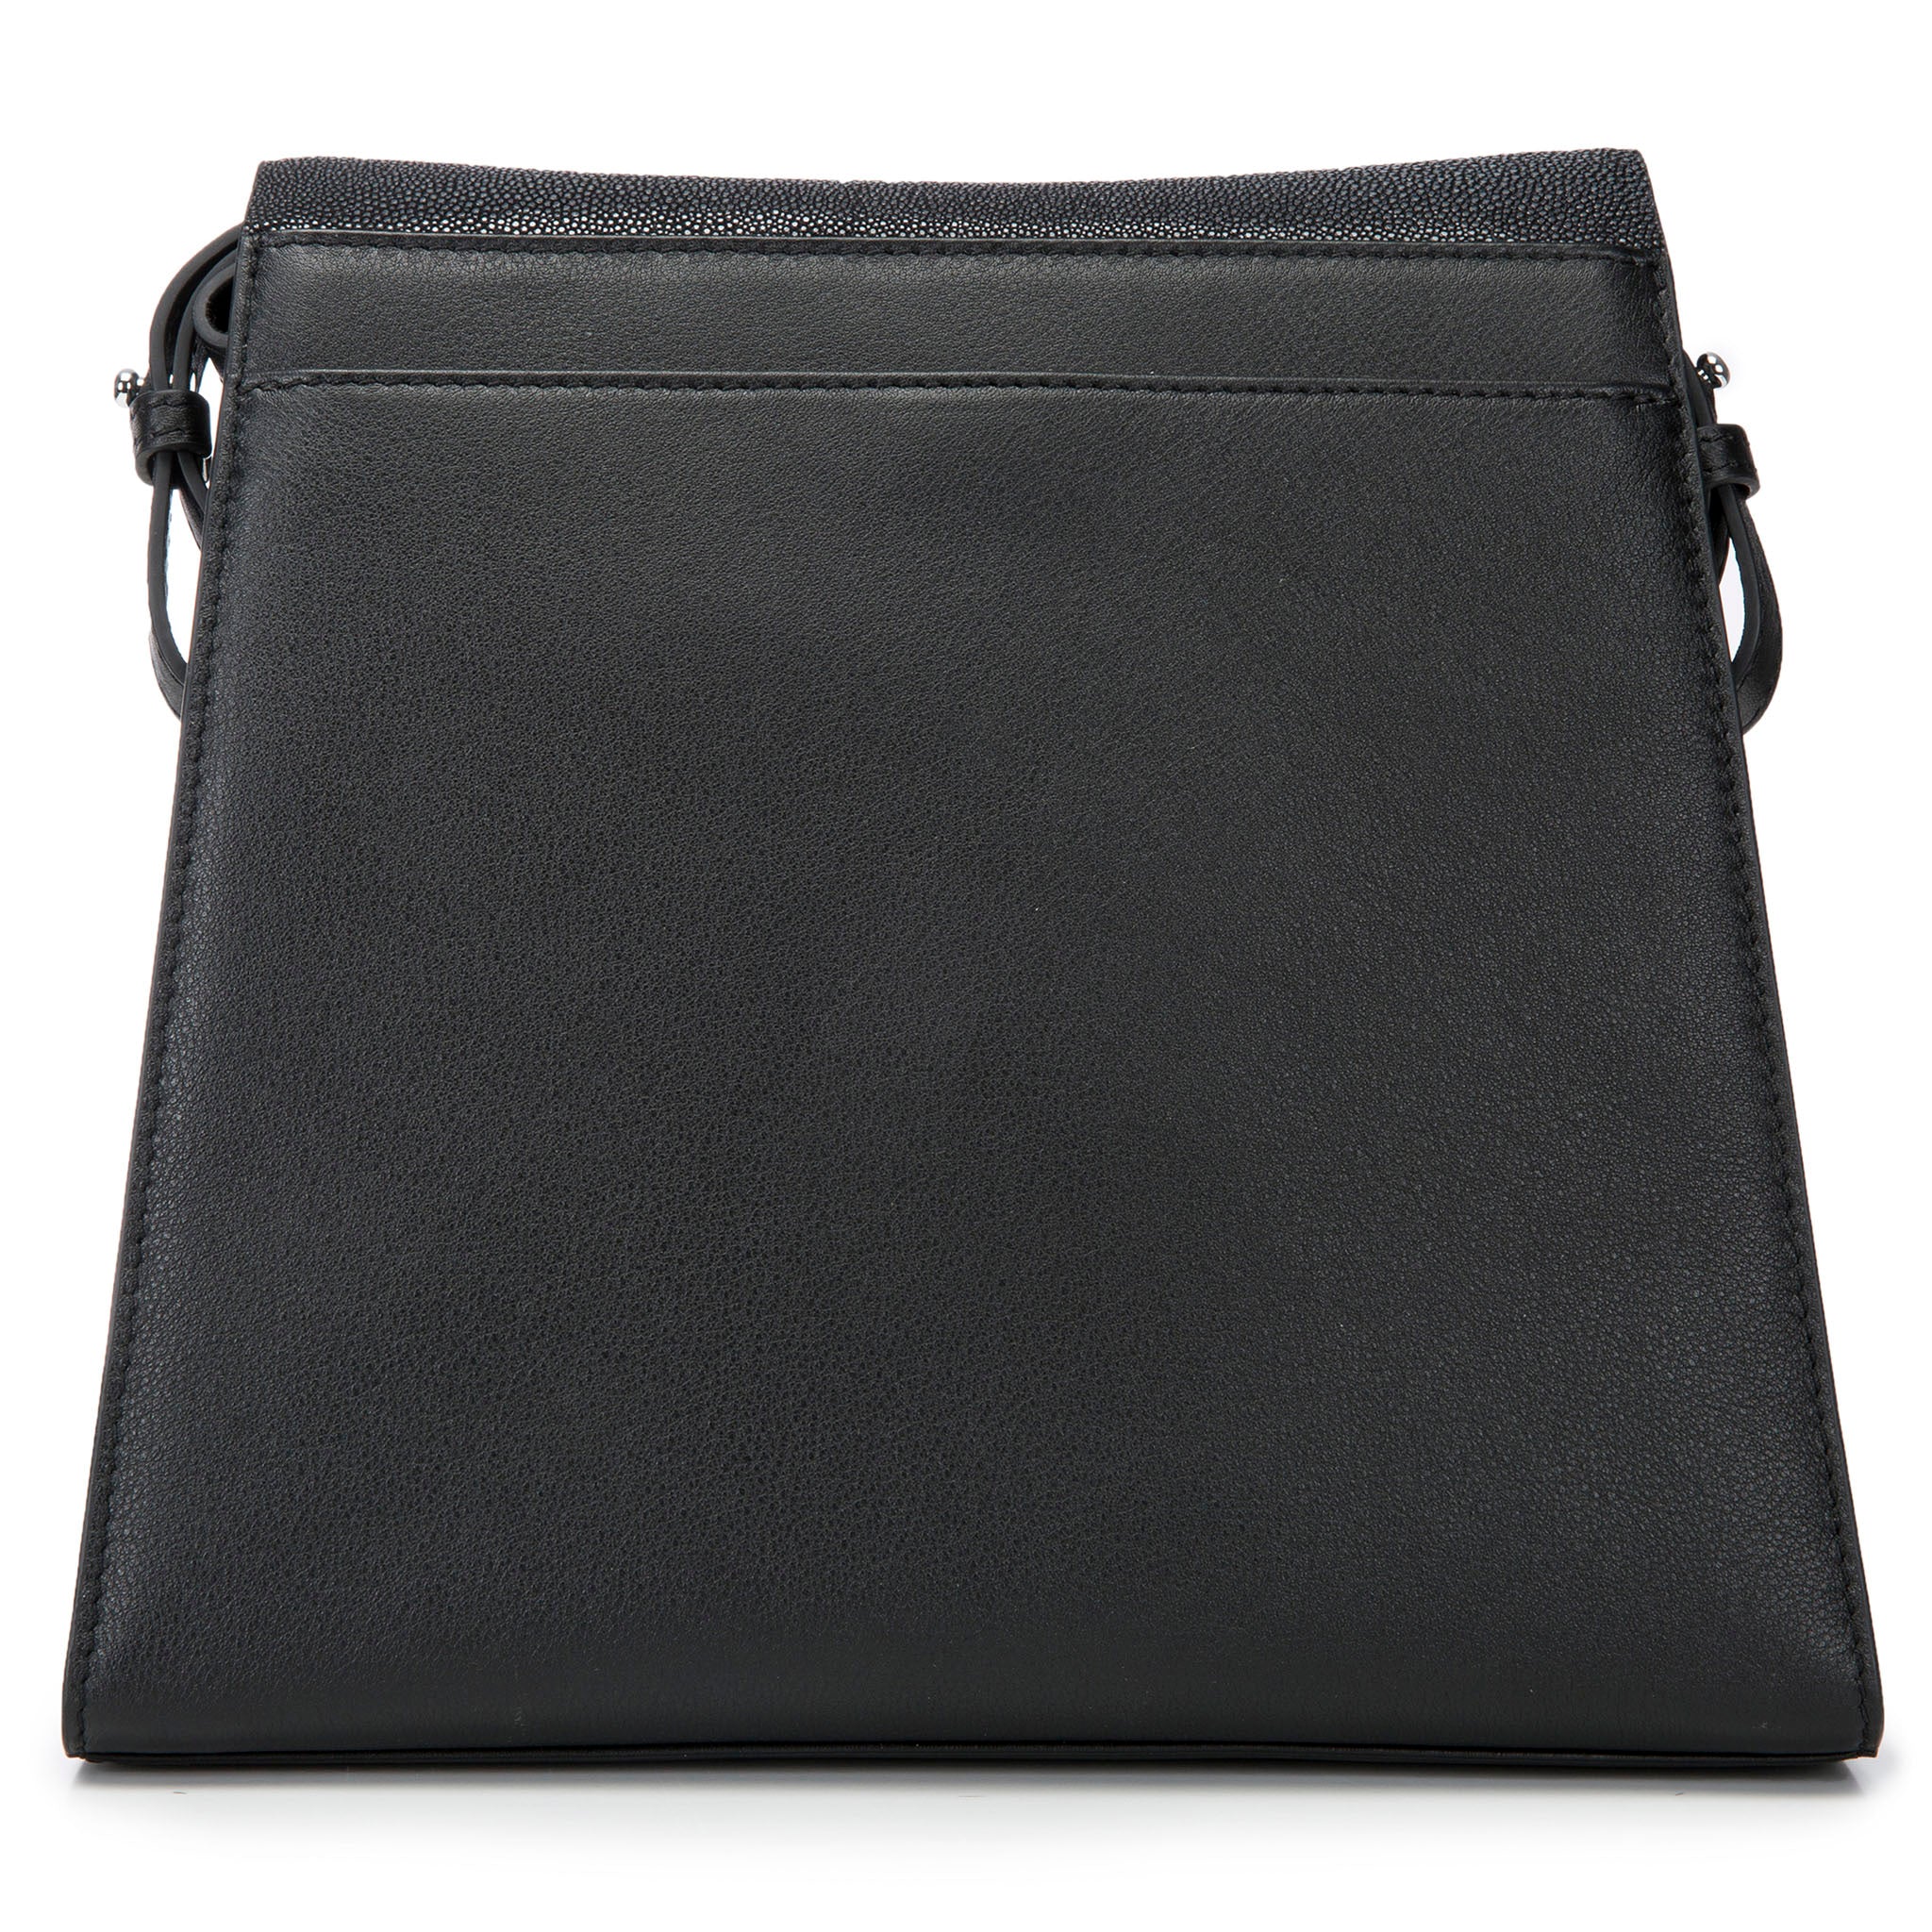 Modern Classic Crossbody Bag Black Shagreen Top And Black Leather Body Back View Jacq - Vivo Direct 